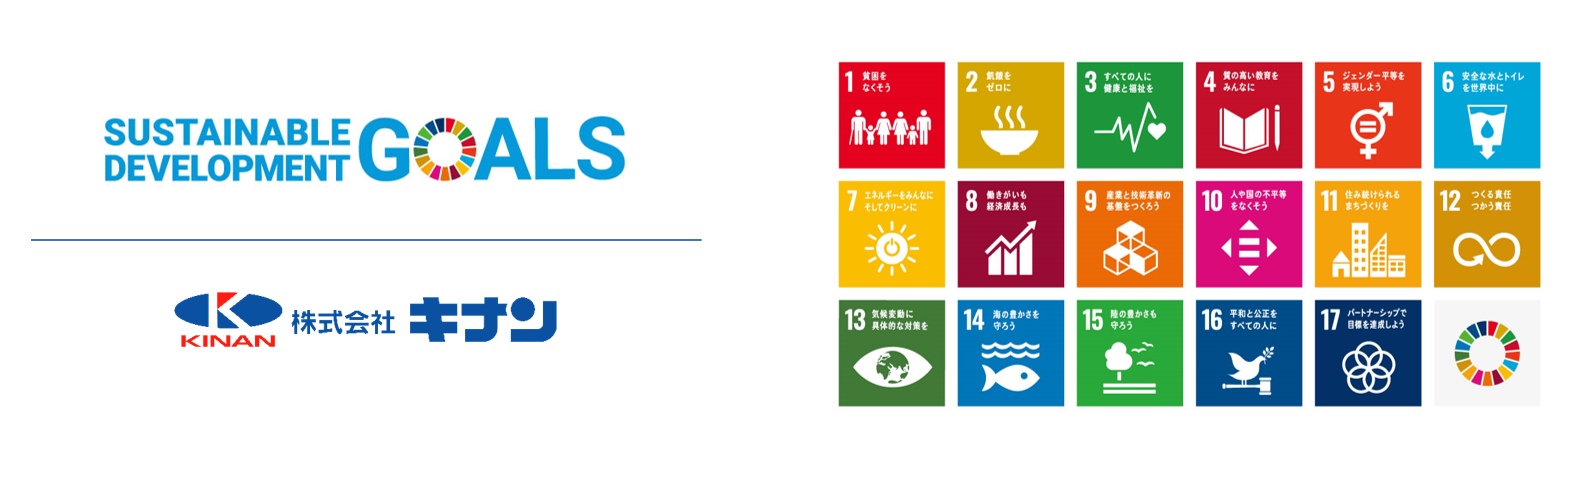 SDGs（持続可能な開発目標）の実現に貢献します